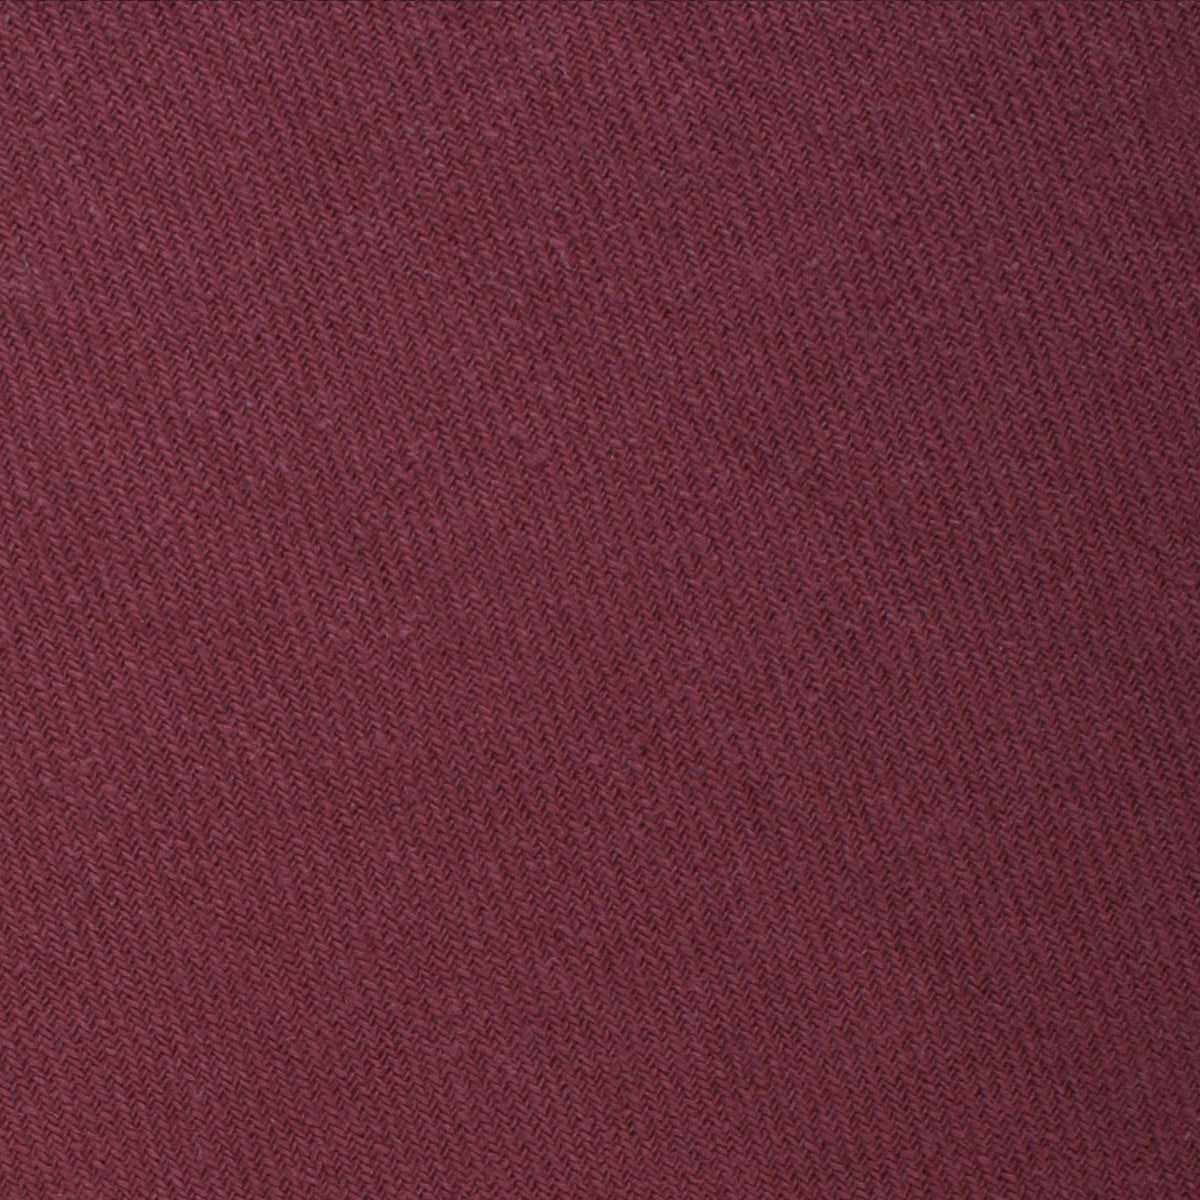 Mulberry Linen Necktie Fabric